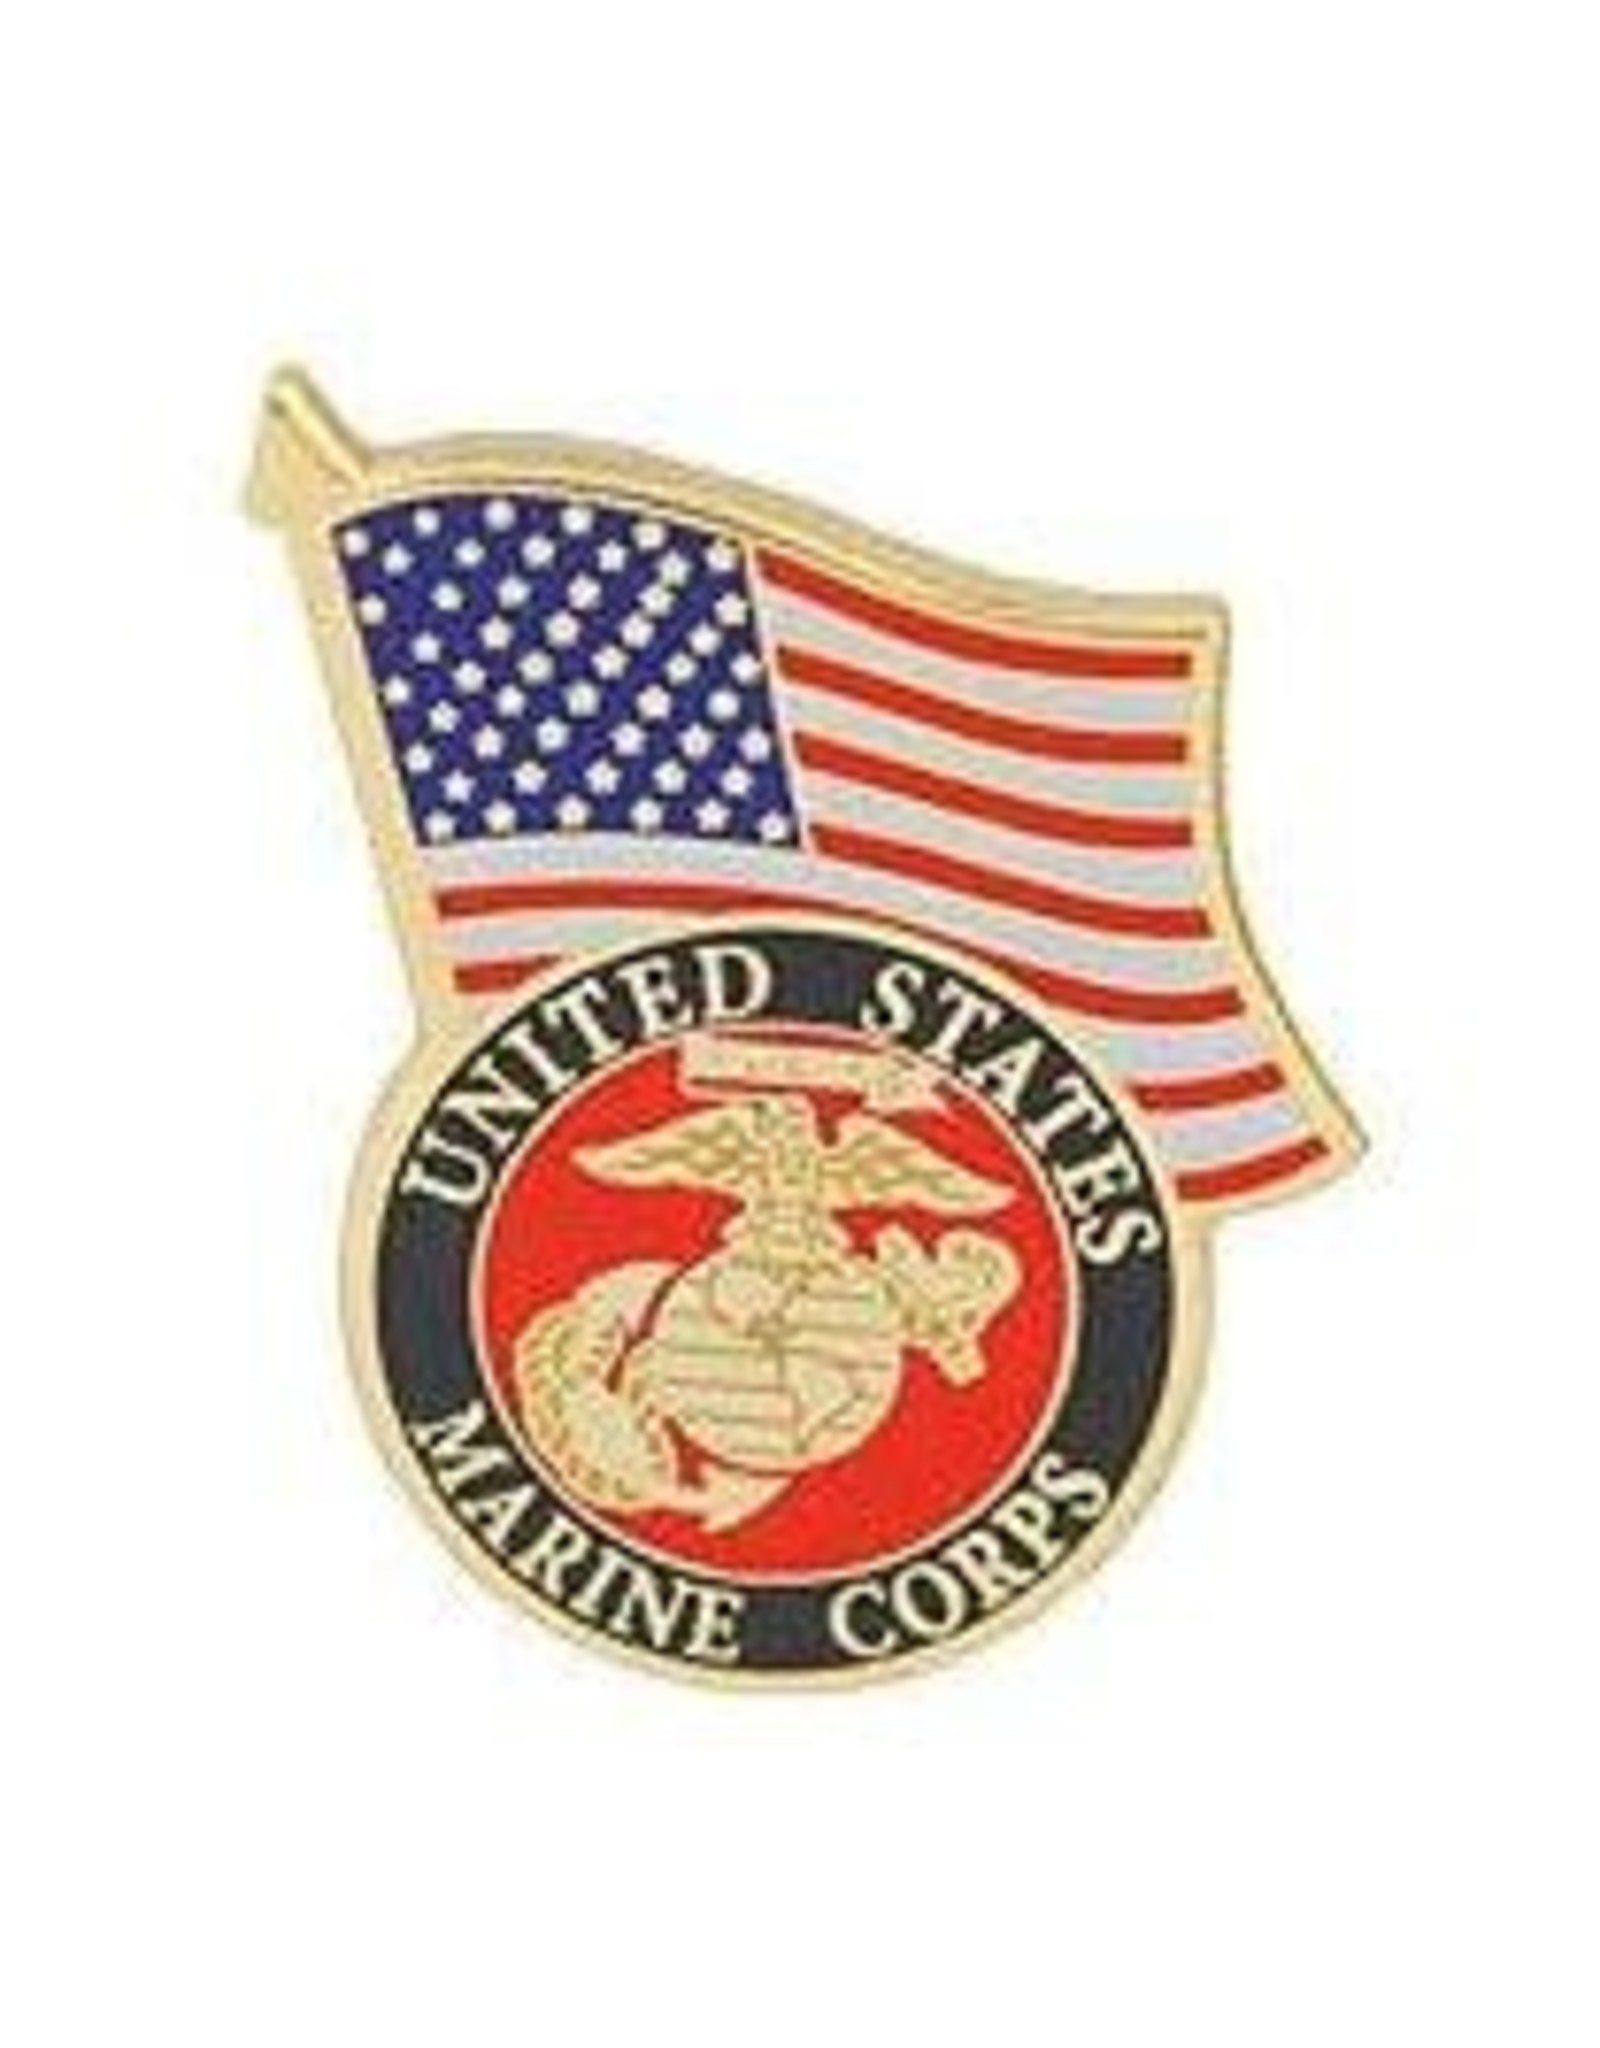 Pin - USMC Logo w/ USA Flag